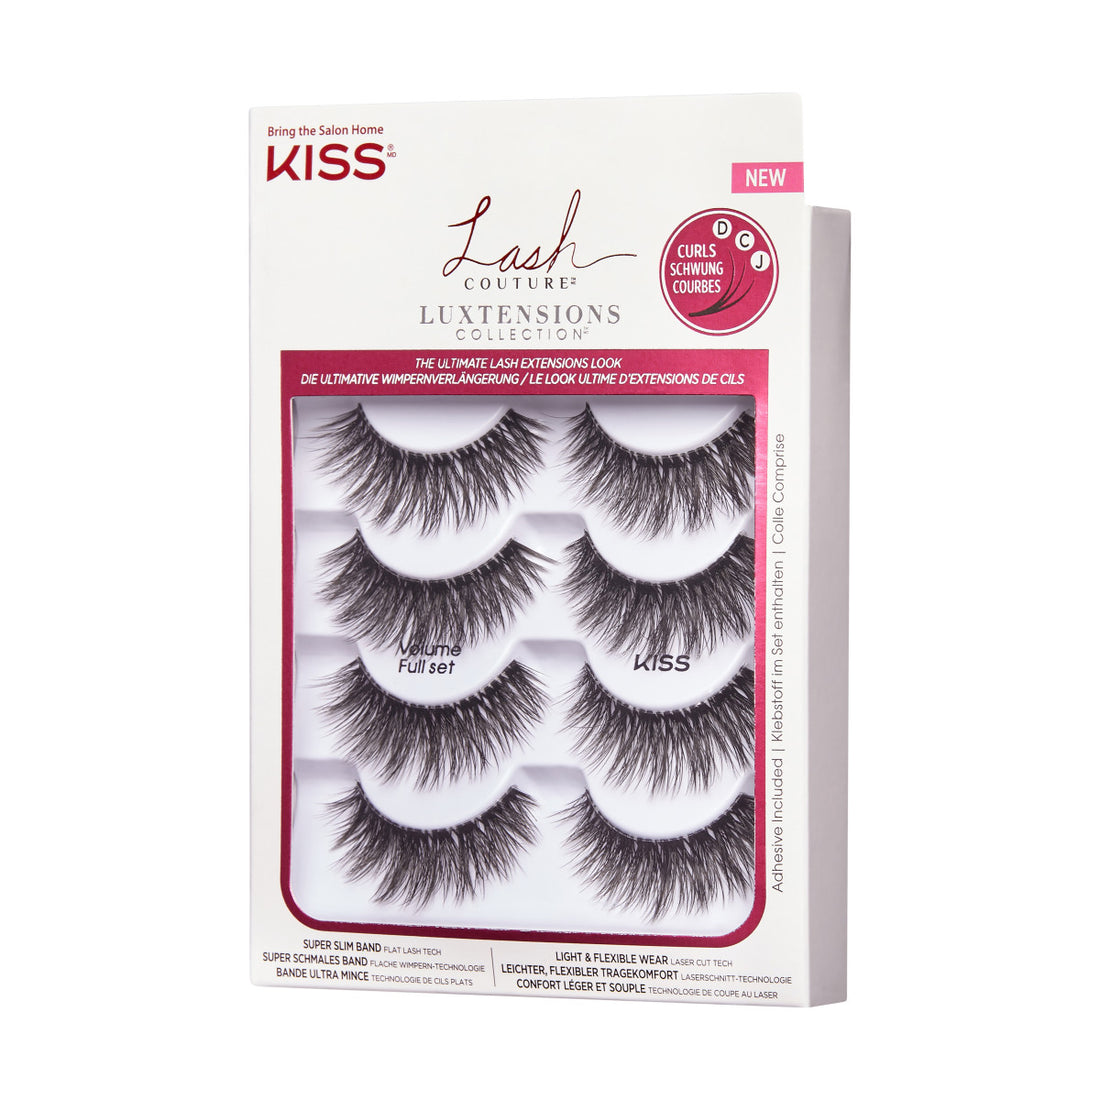 KISS Lash Couture LuXtensions False Eyelashes Multipack, Volume Full Set, 4 Pairs